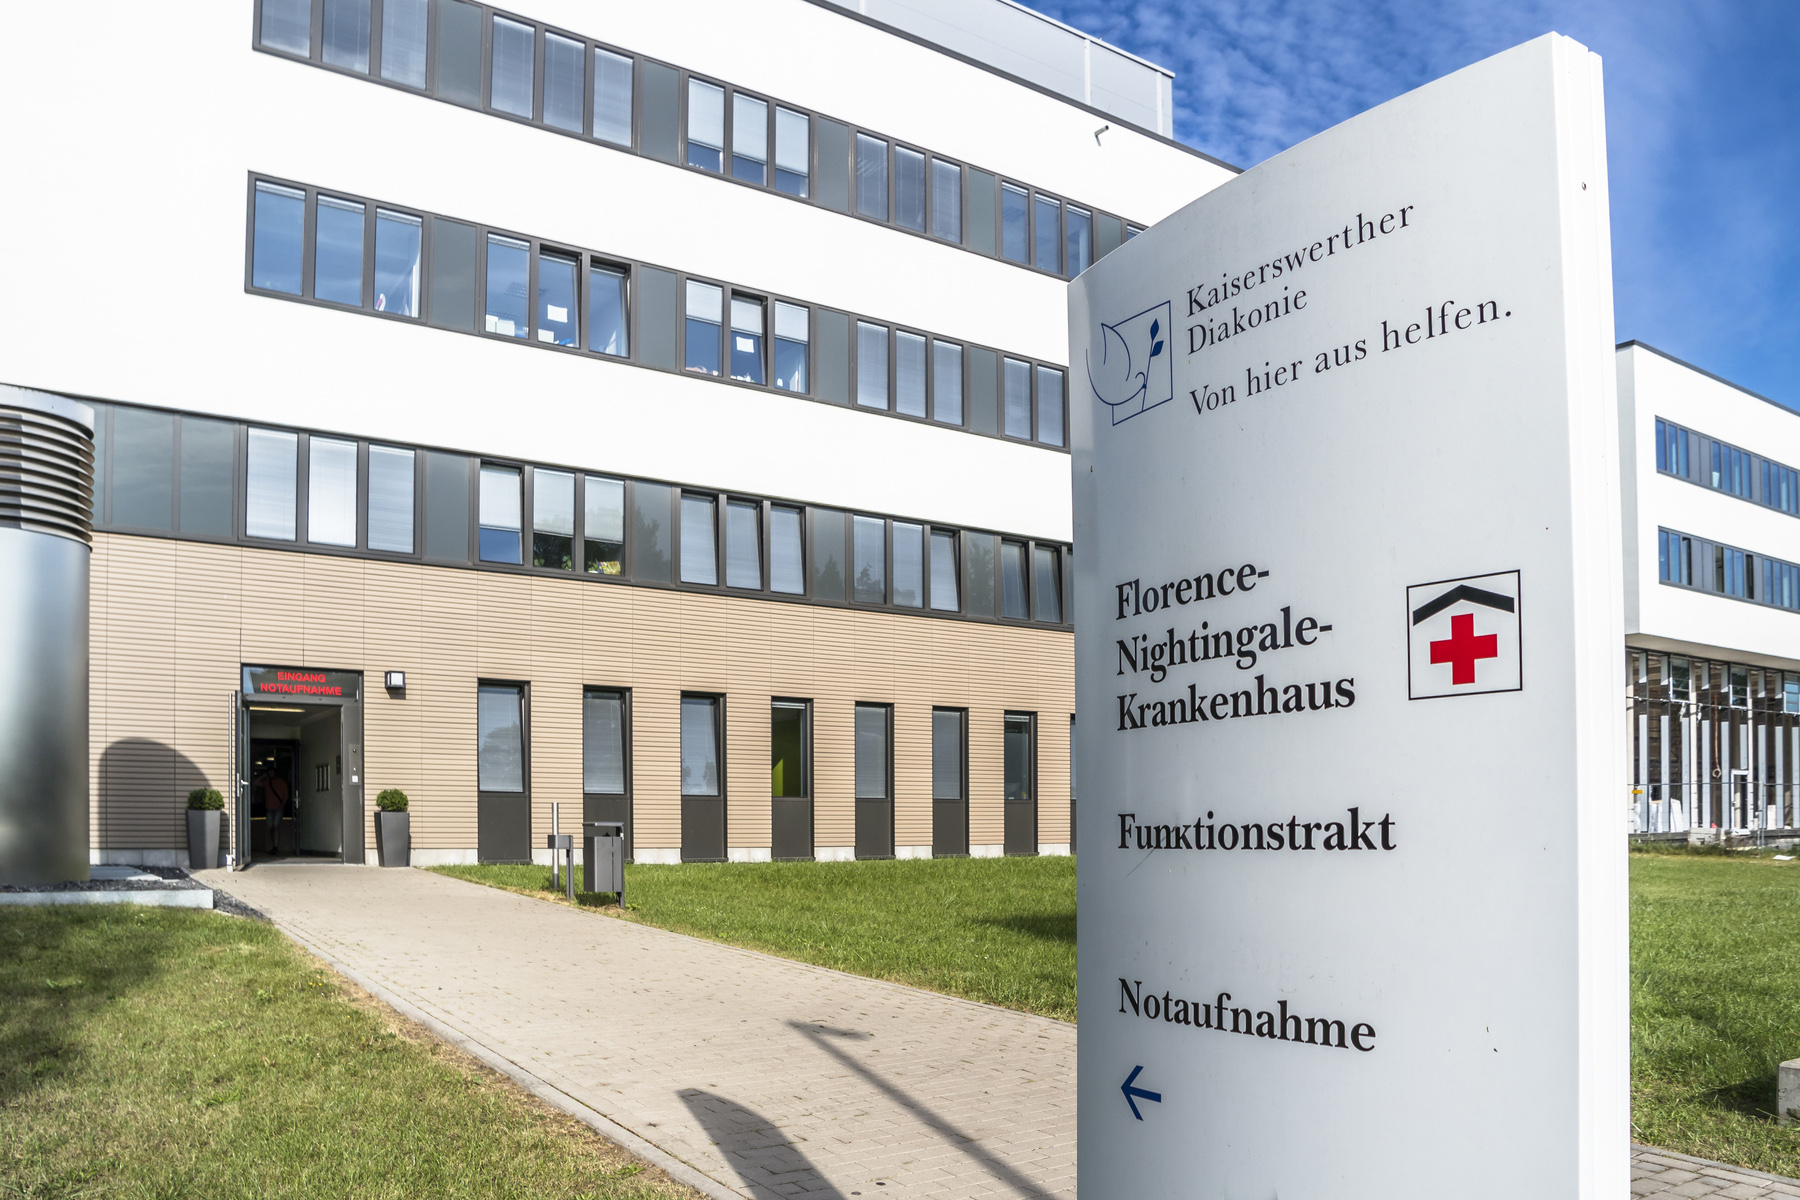 The emergency room entrance to Florence Nightingale Hospital in Düsseldorf, Germany 